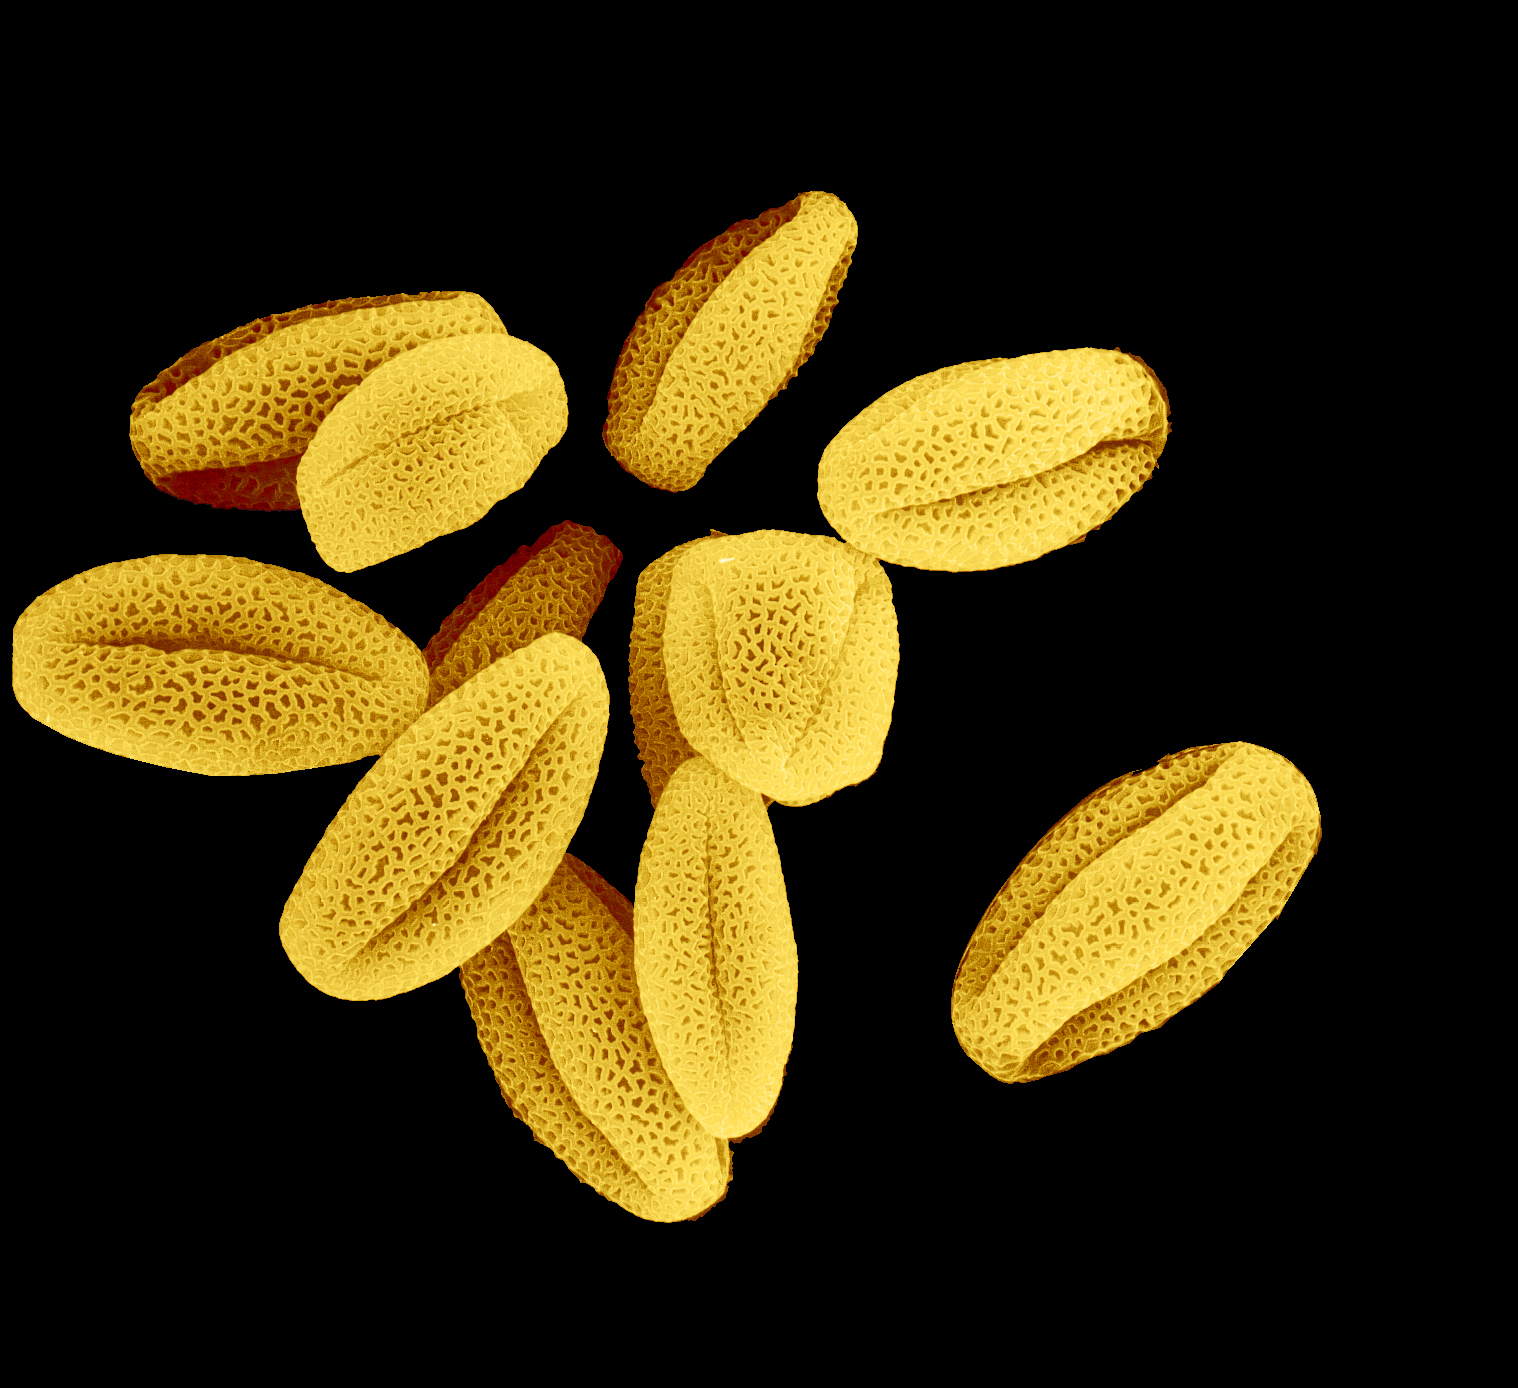 Пыльца форум. Микрофотография пыльцы покрытосеменных. Пыльца цветковых растений. Пыльца сосны микрофотография. Пыльца растений под микроскопом.